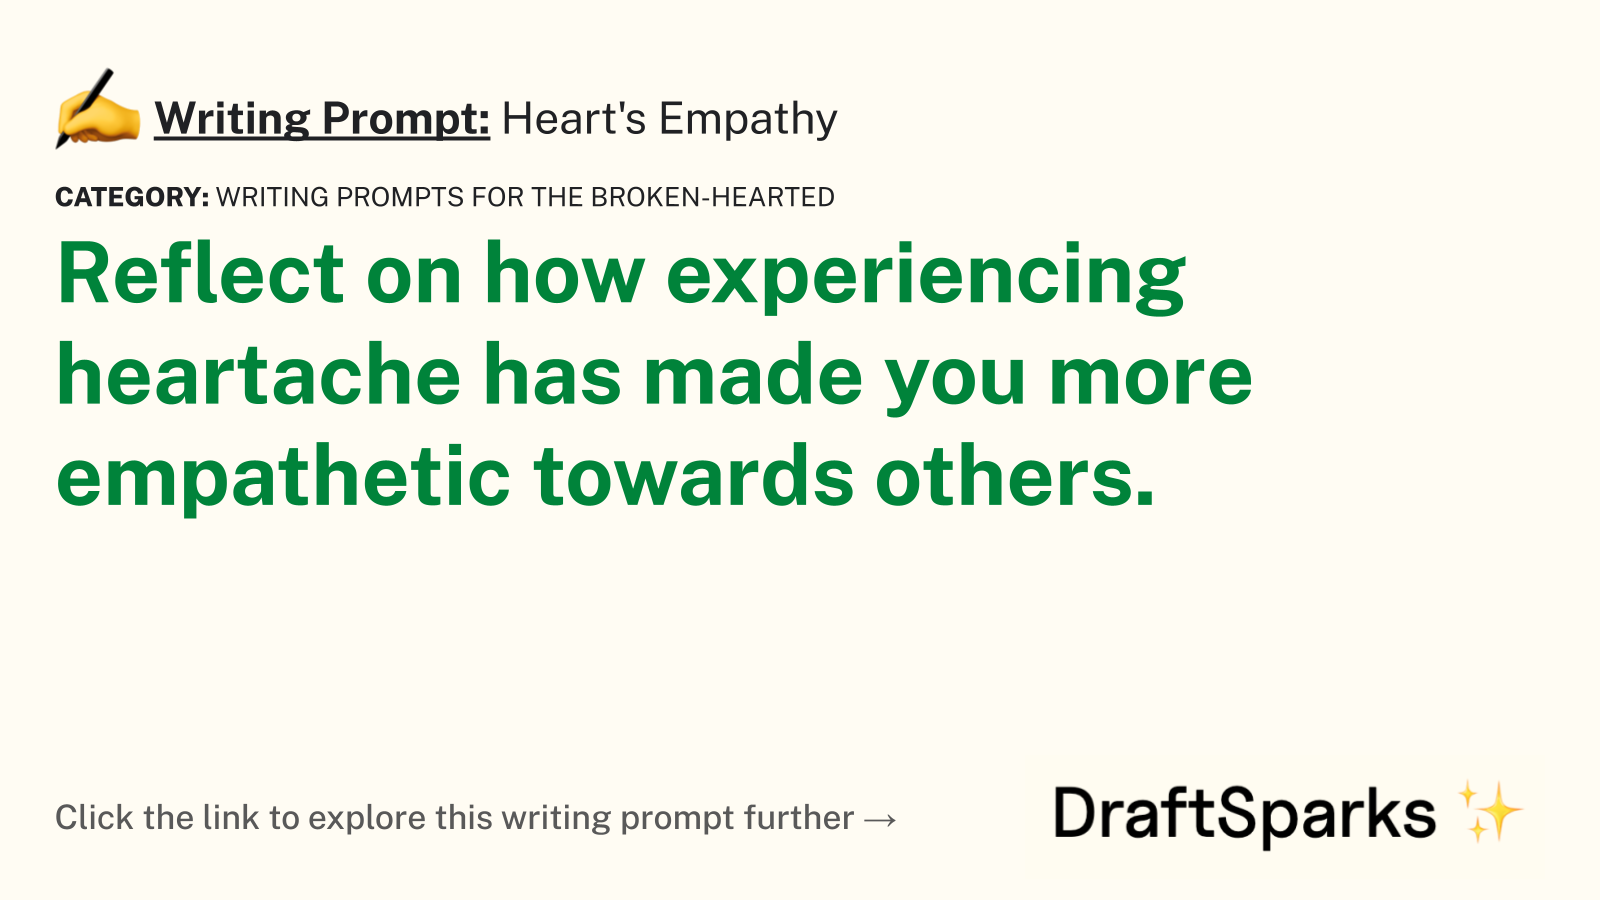 Heart’s Empathy